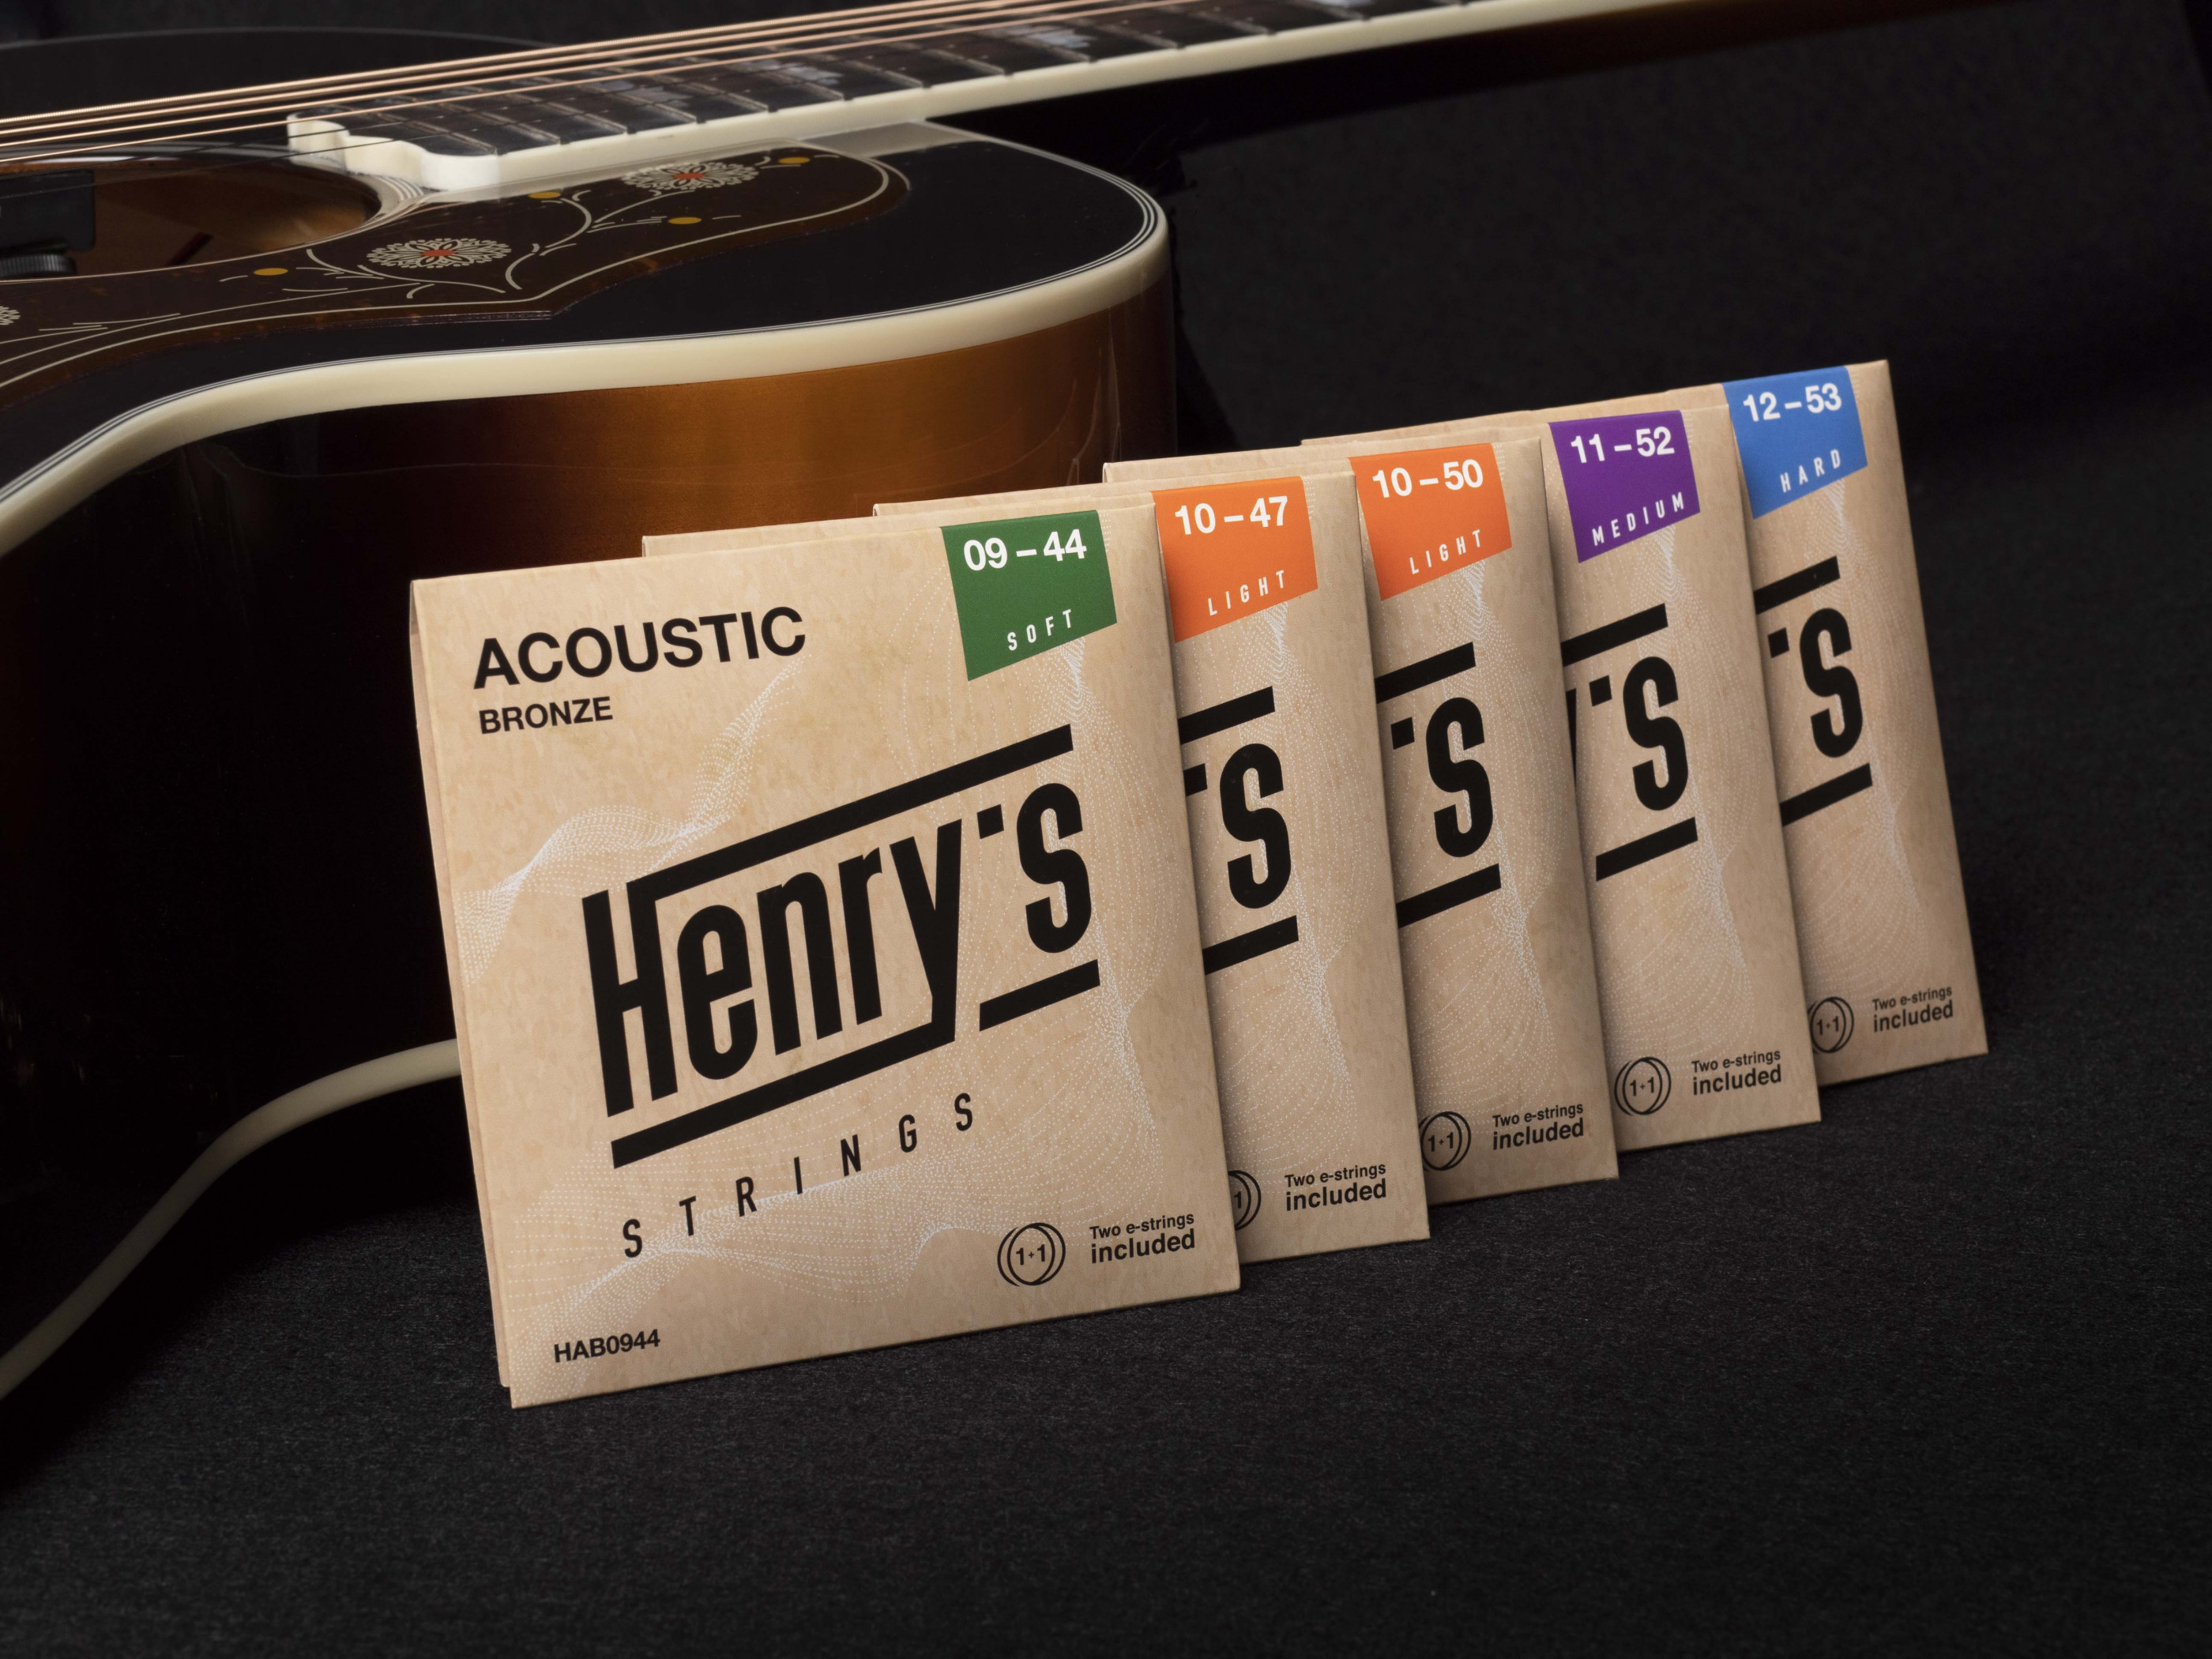 HENRY'S STRINGS HAB1152 Acoustic Bronze - 011“ - 052“